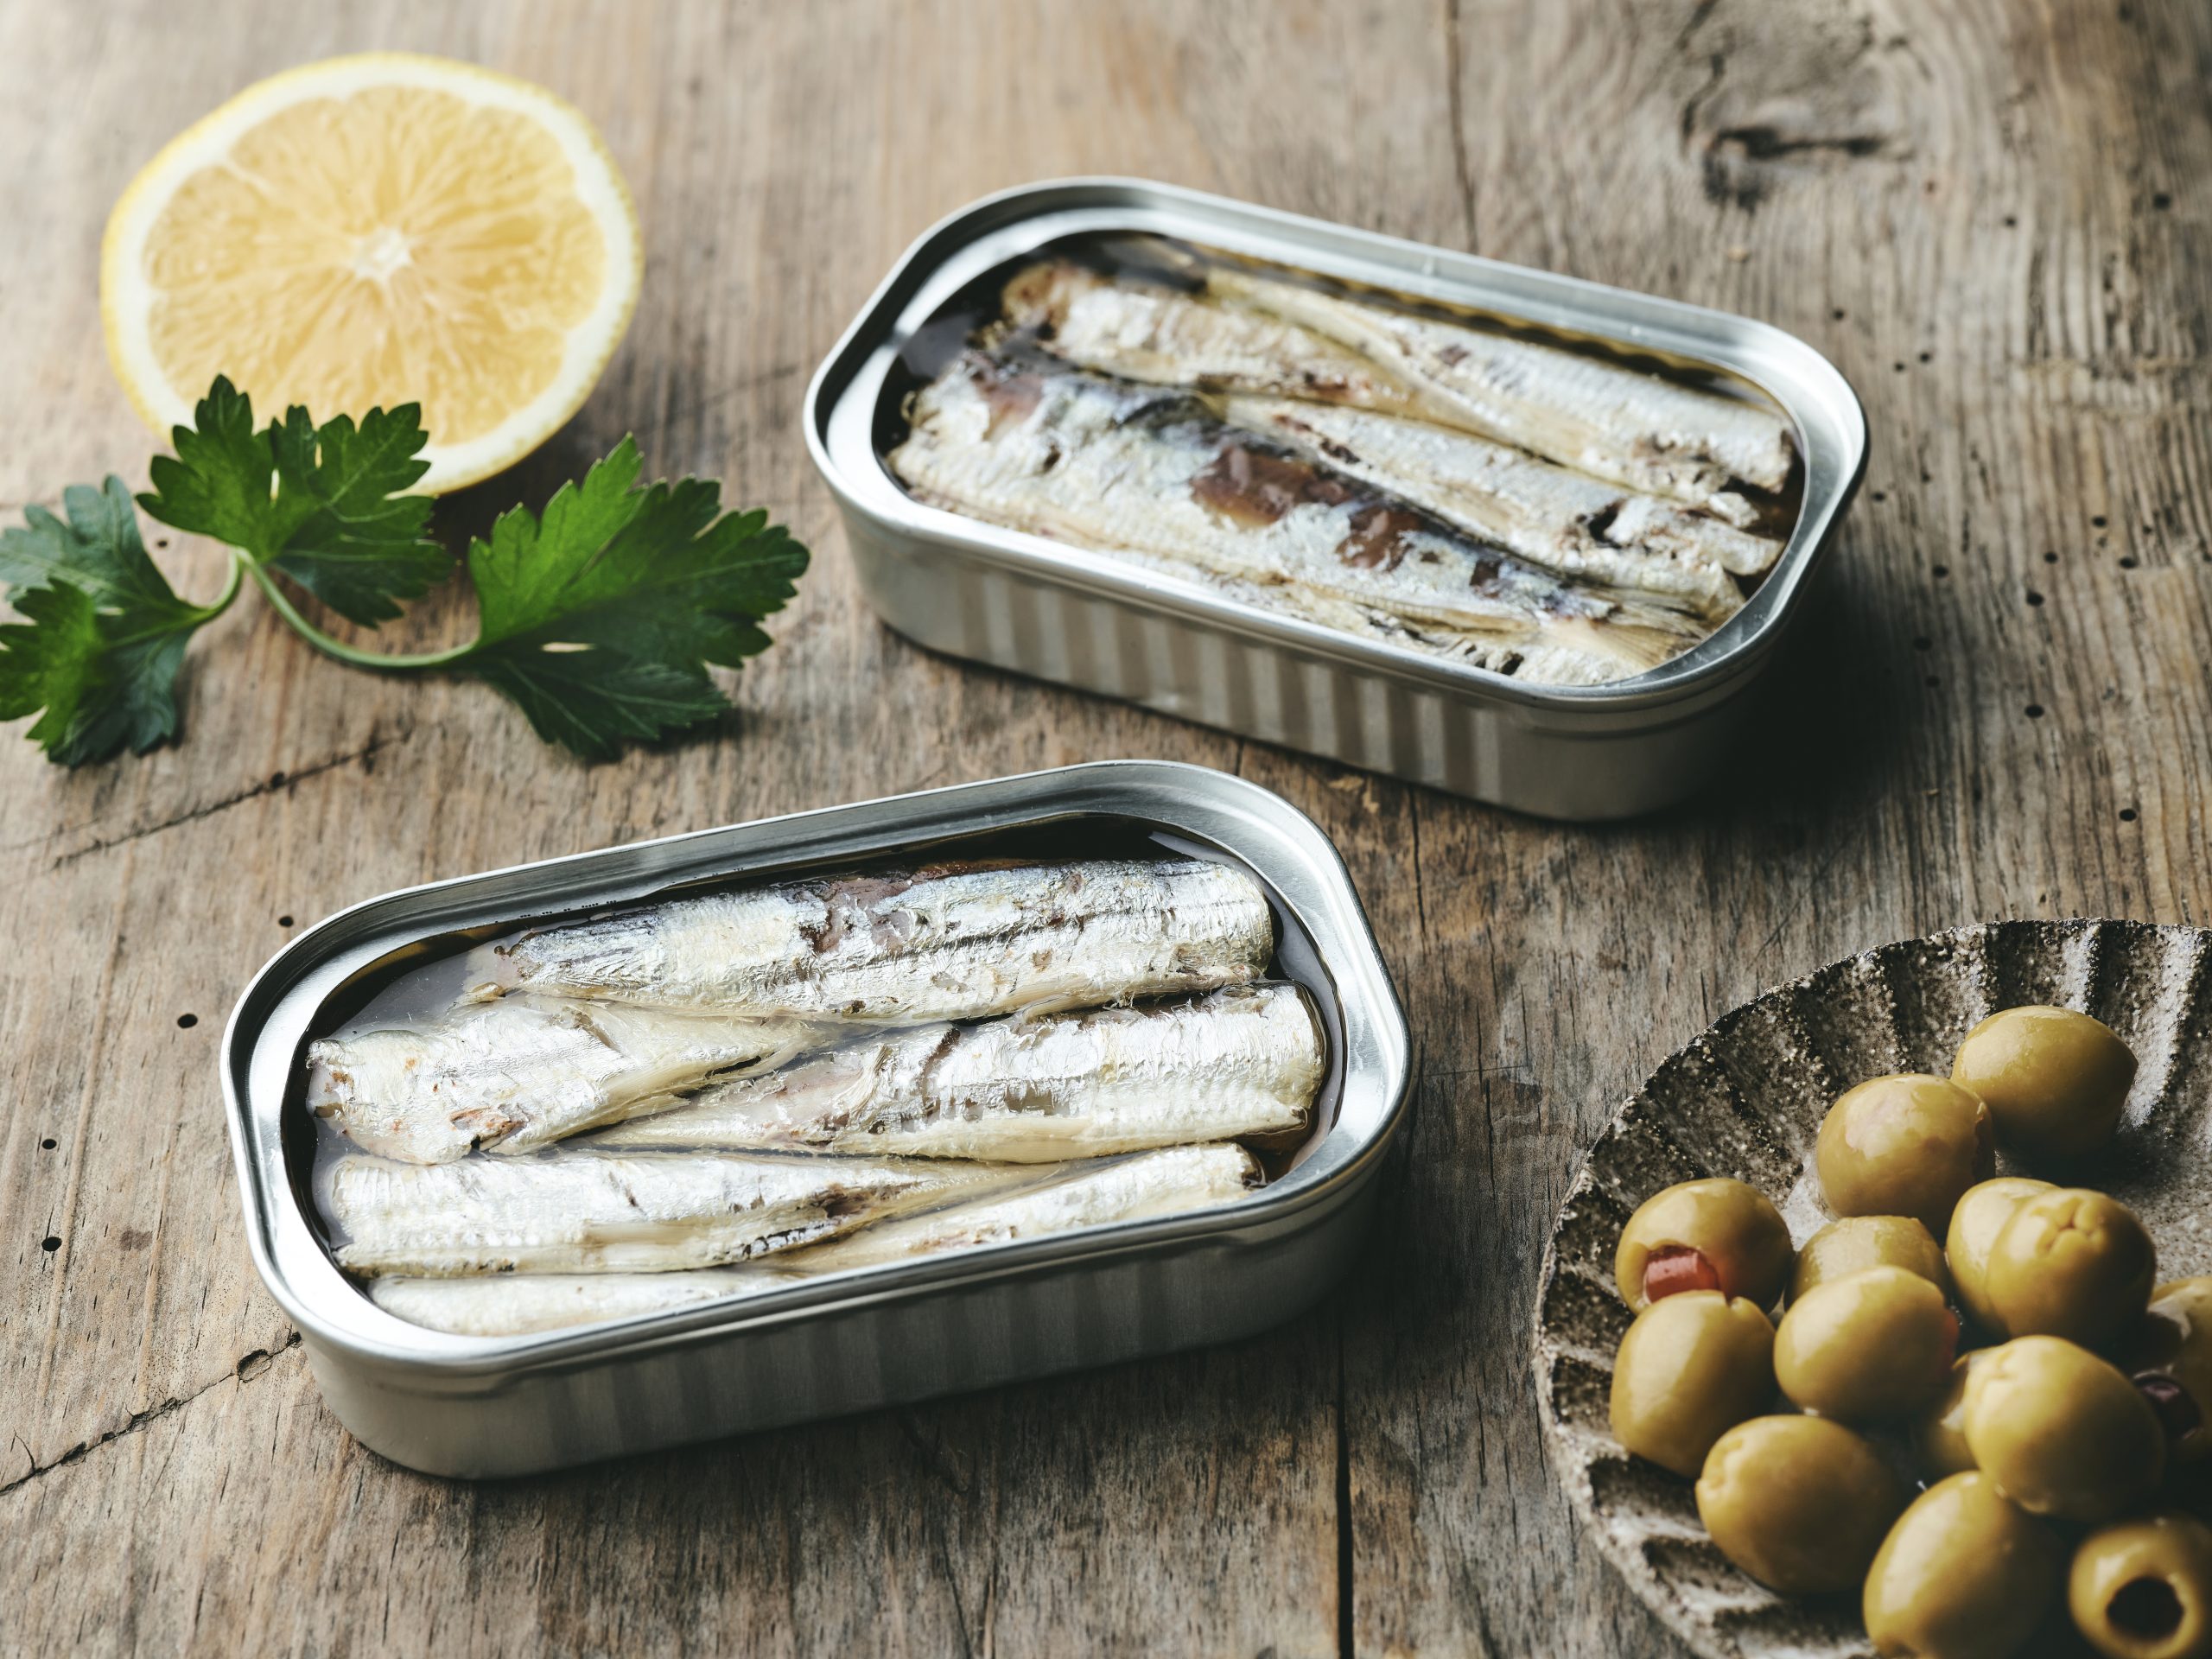 Can I eat a tin of mackerel everyday